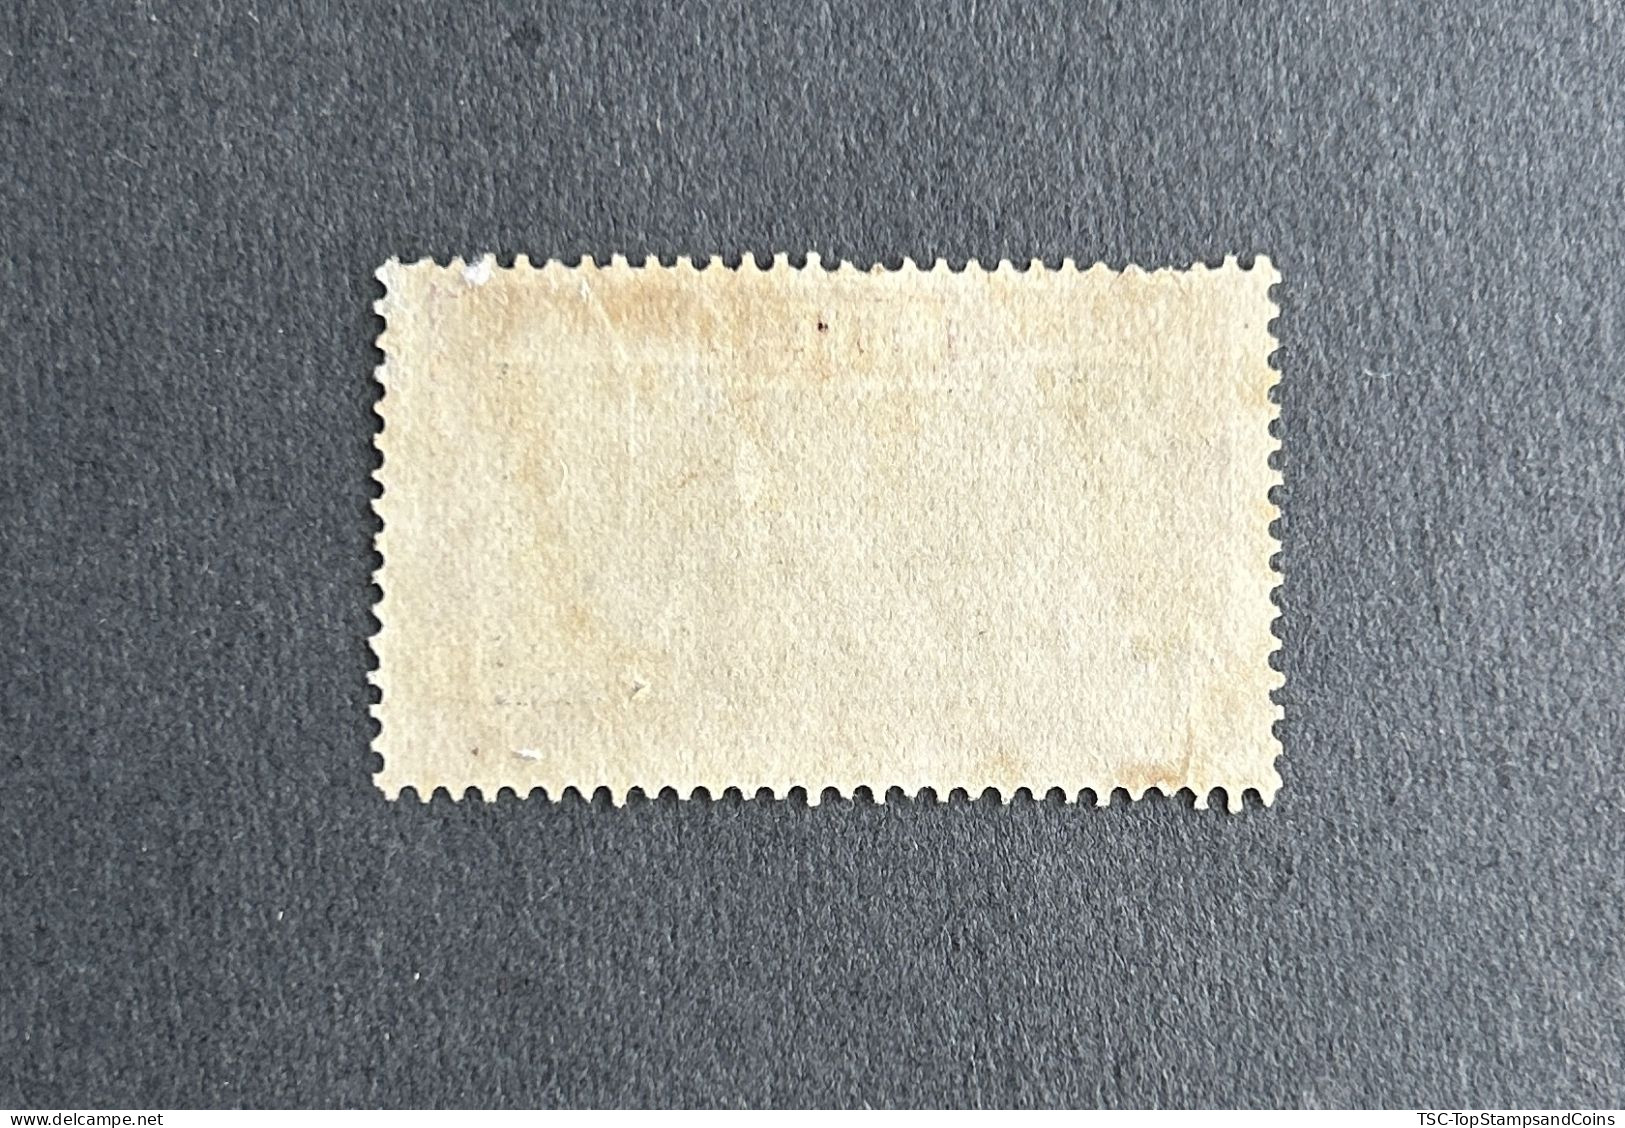 FRTG0141U2 - Agriculture - Oil Palm Plantation - 1 F Used Stamp - French Togo - 1924 - Usati